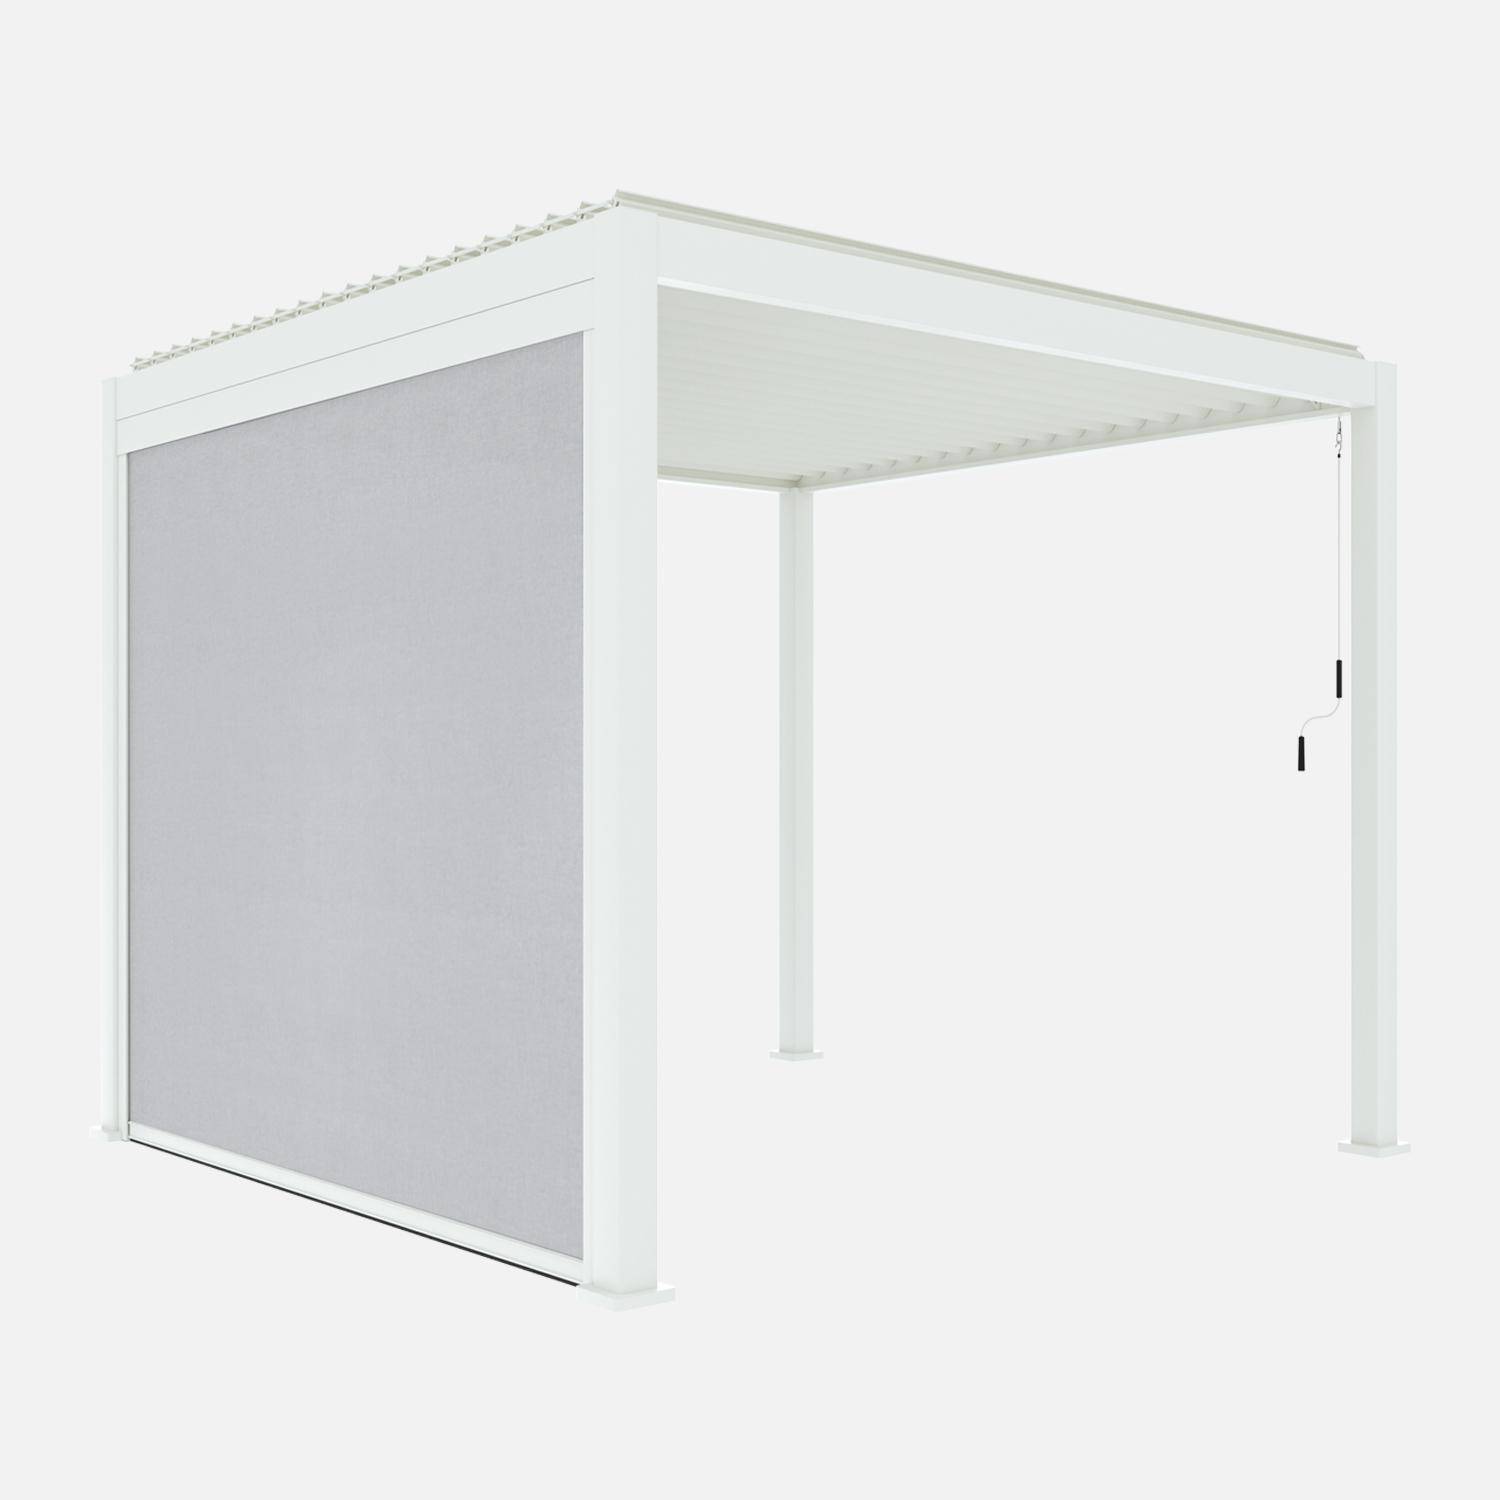 Pergola met lamellendak, wit aluminium frame en textileen luifel, Triomphe 3x3 m, verstelbare lamellen,sweeek,Photo4